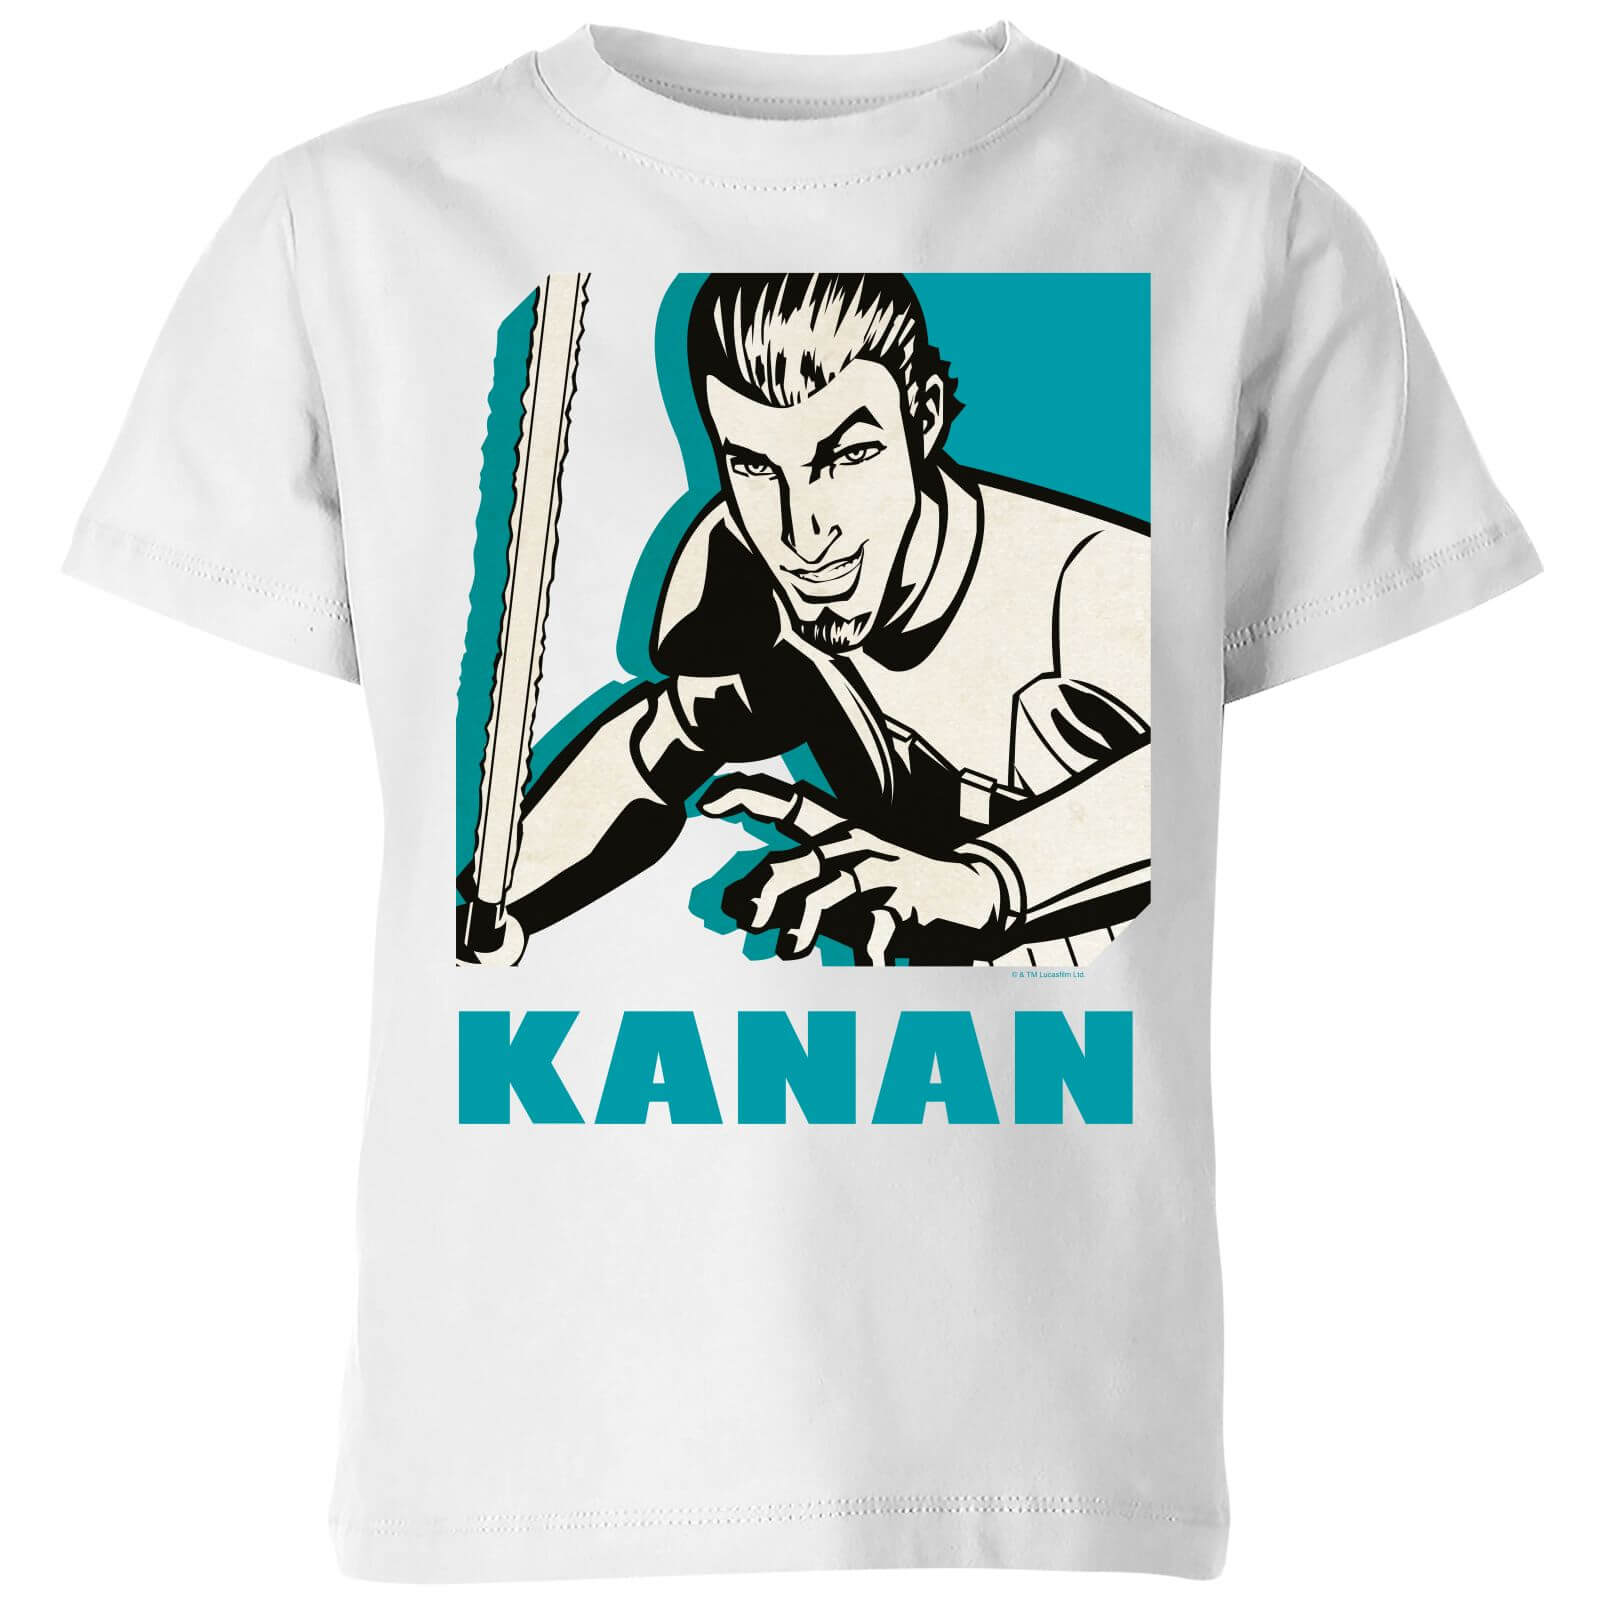 Star Wars Rebels Kanan Kids' T-Shirt - White - 9-10 Years - White